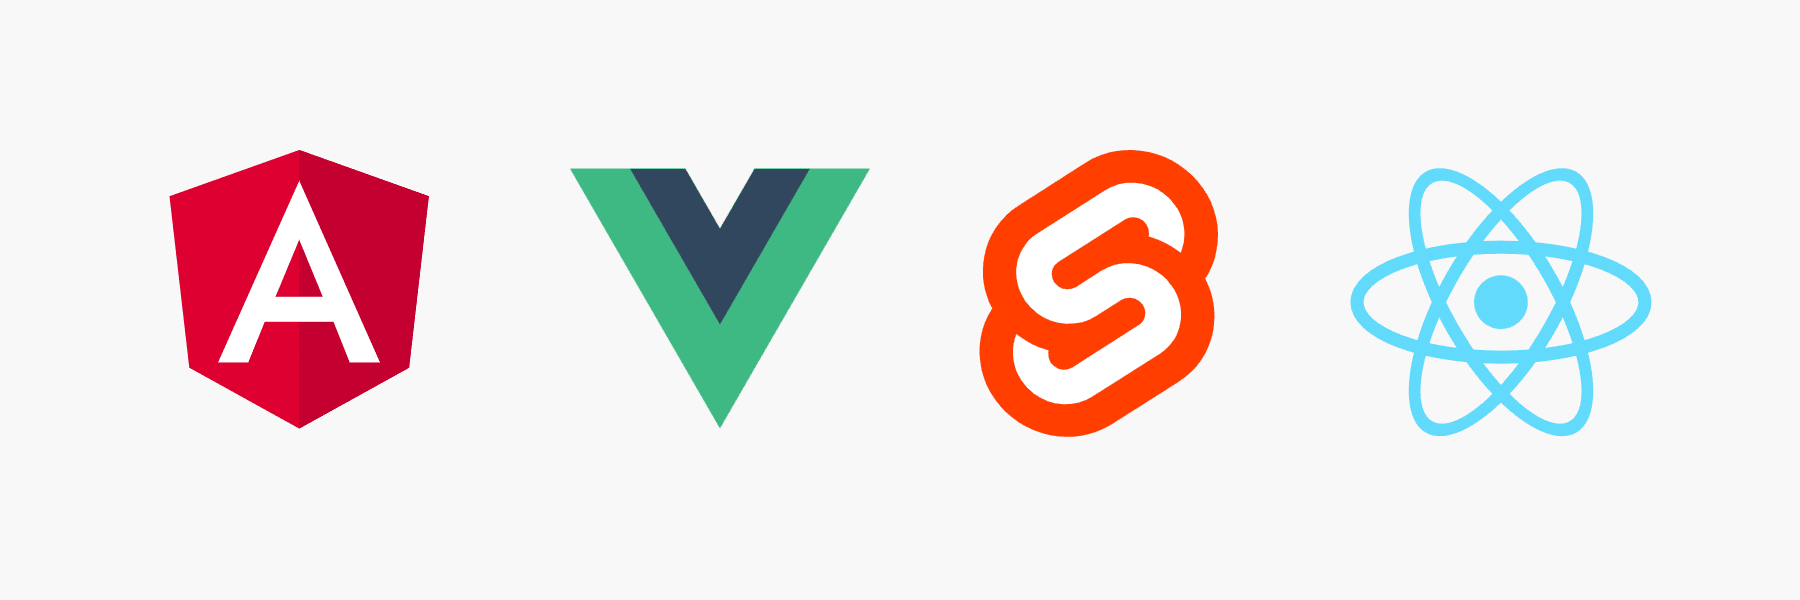 Image of the Angular, Vue, Svelte and React logos